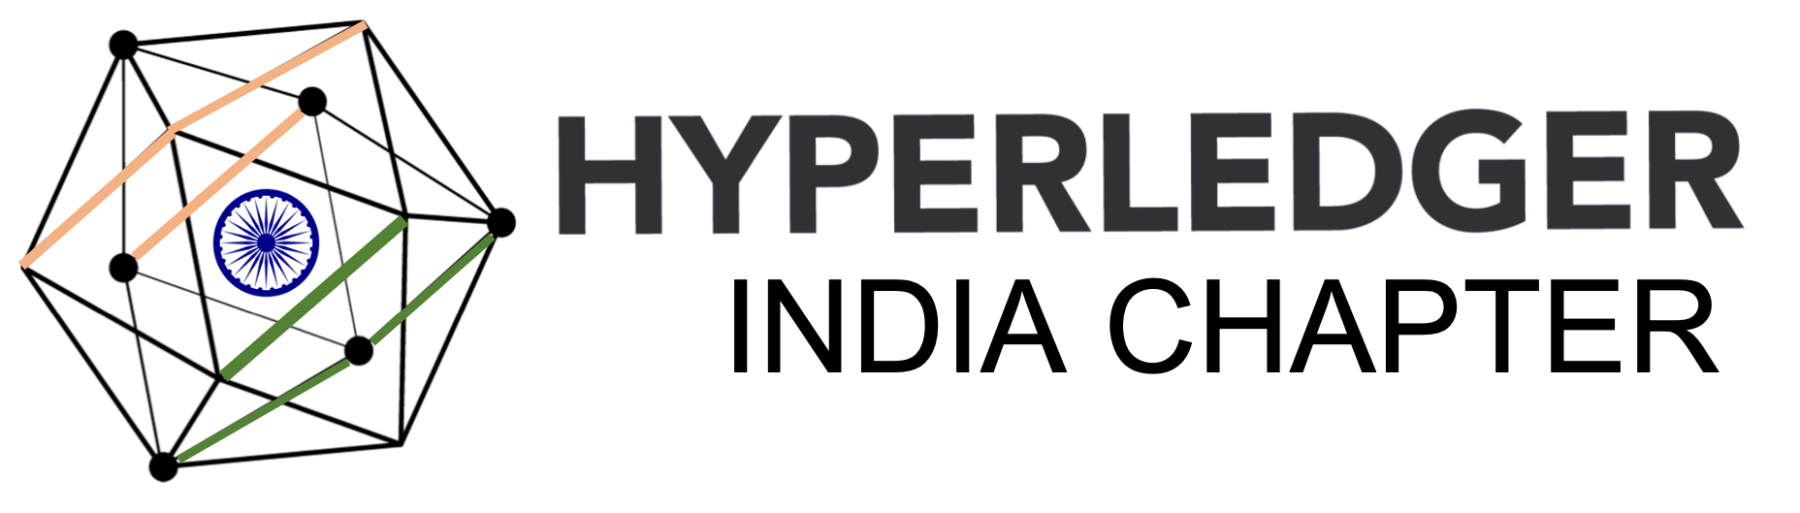 Meet the Hyperledger India Chapter community!